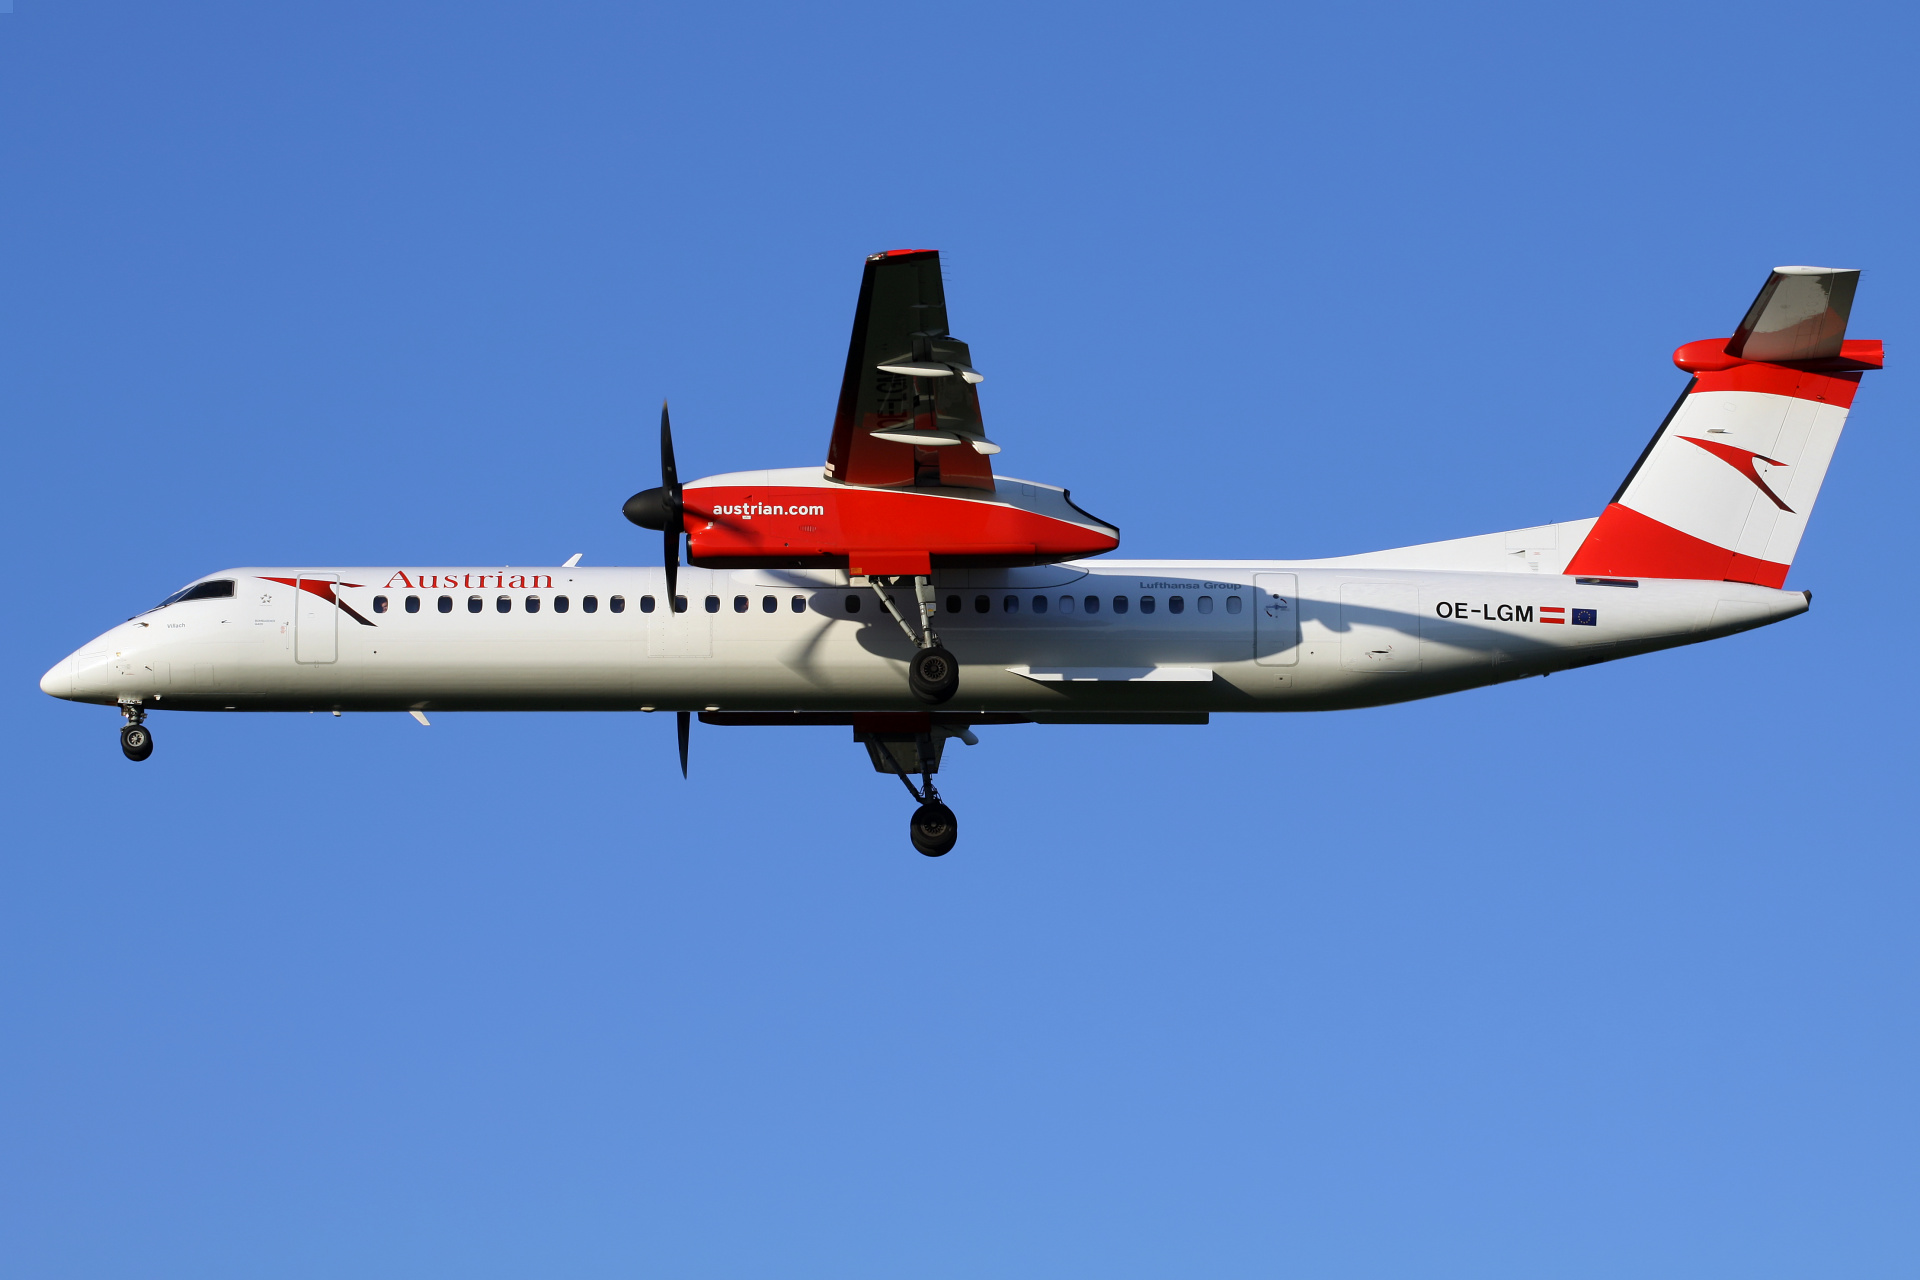 OE-LGM (Samoloty » Spotting na EPWA » De Havilland Canada DHC-8 Dash 8 » Austrian Airlines)